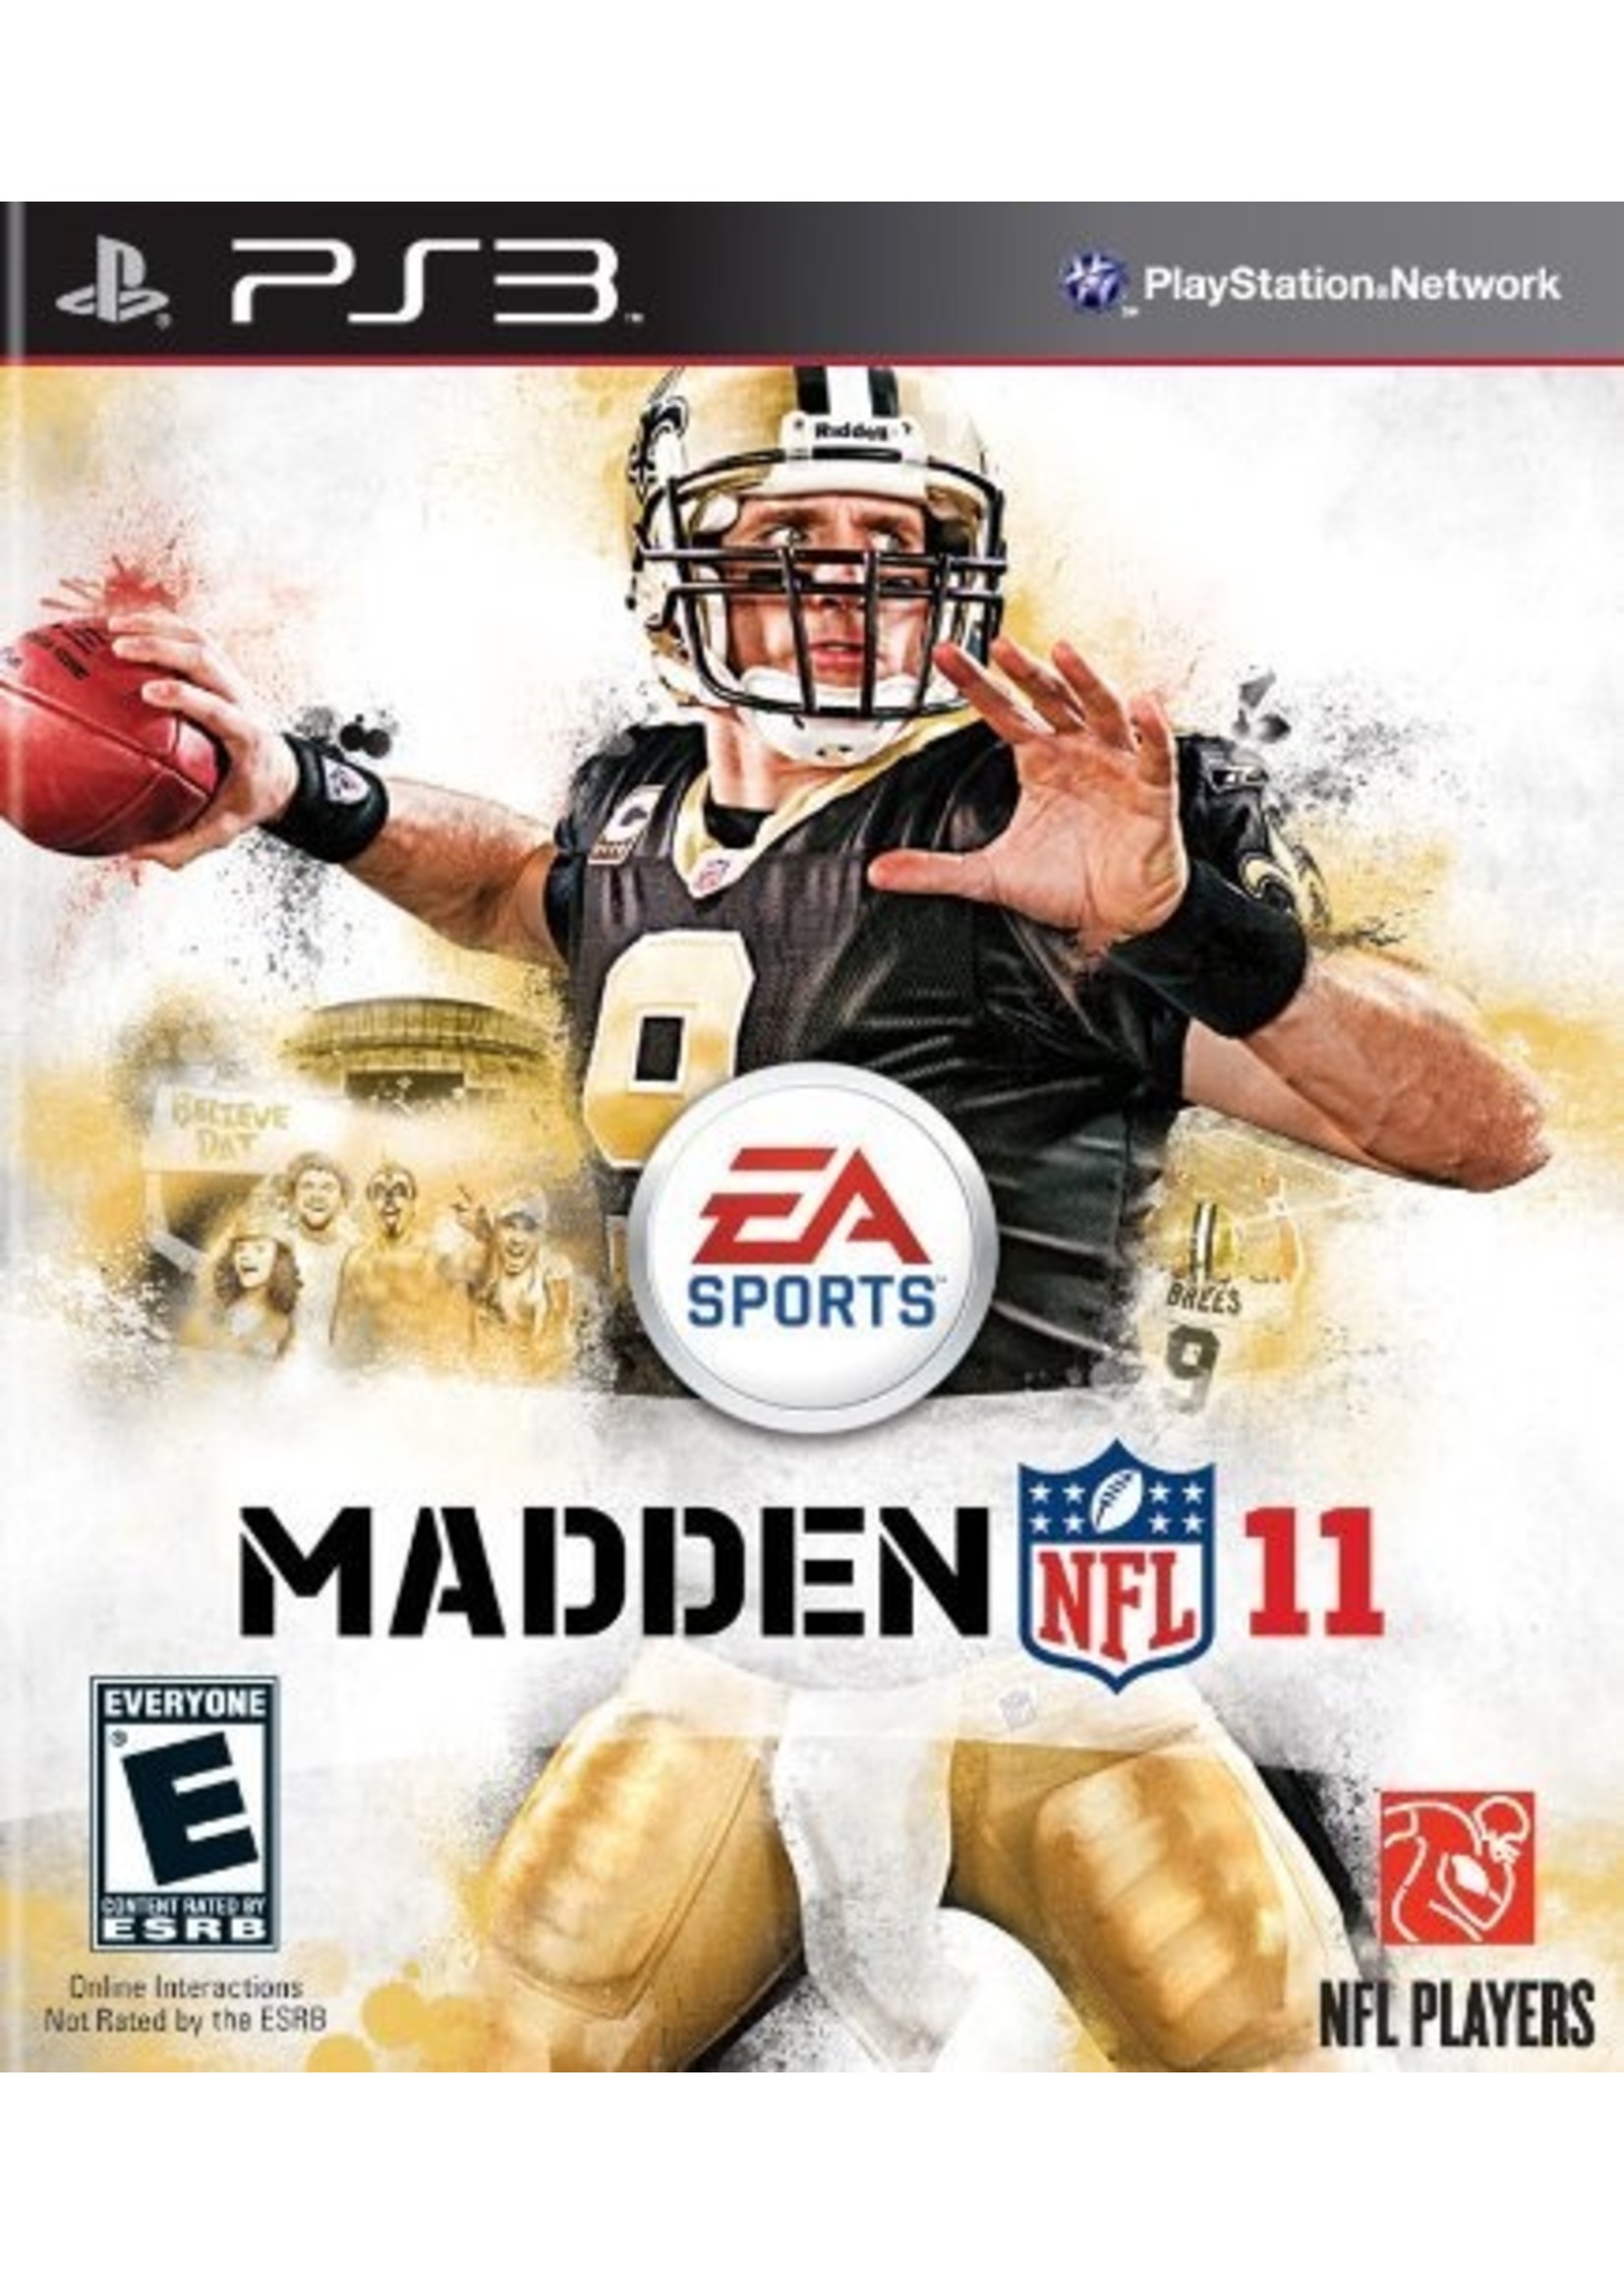 Sony Playstation 3 (PS3) Madden NFL 11